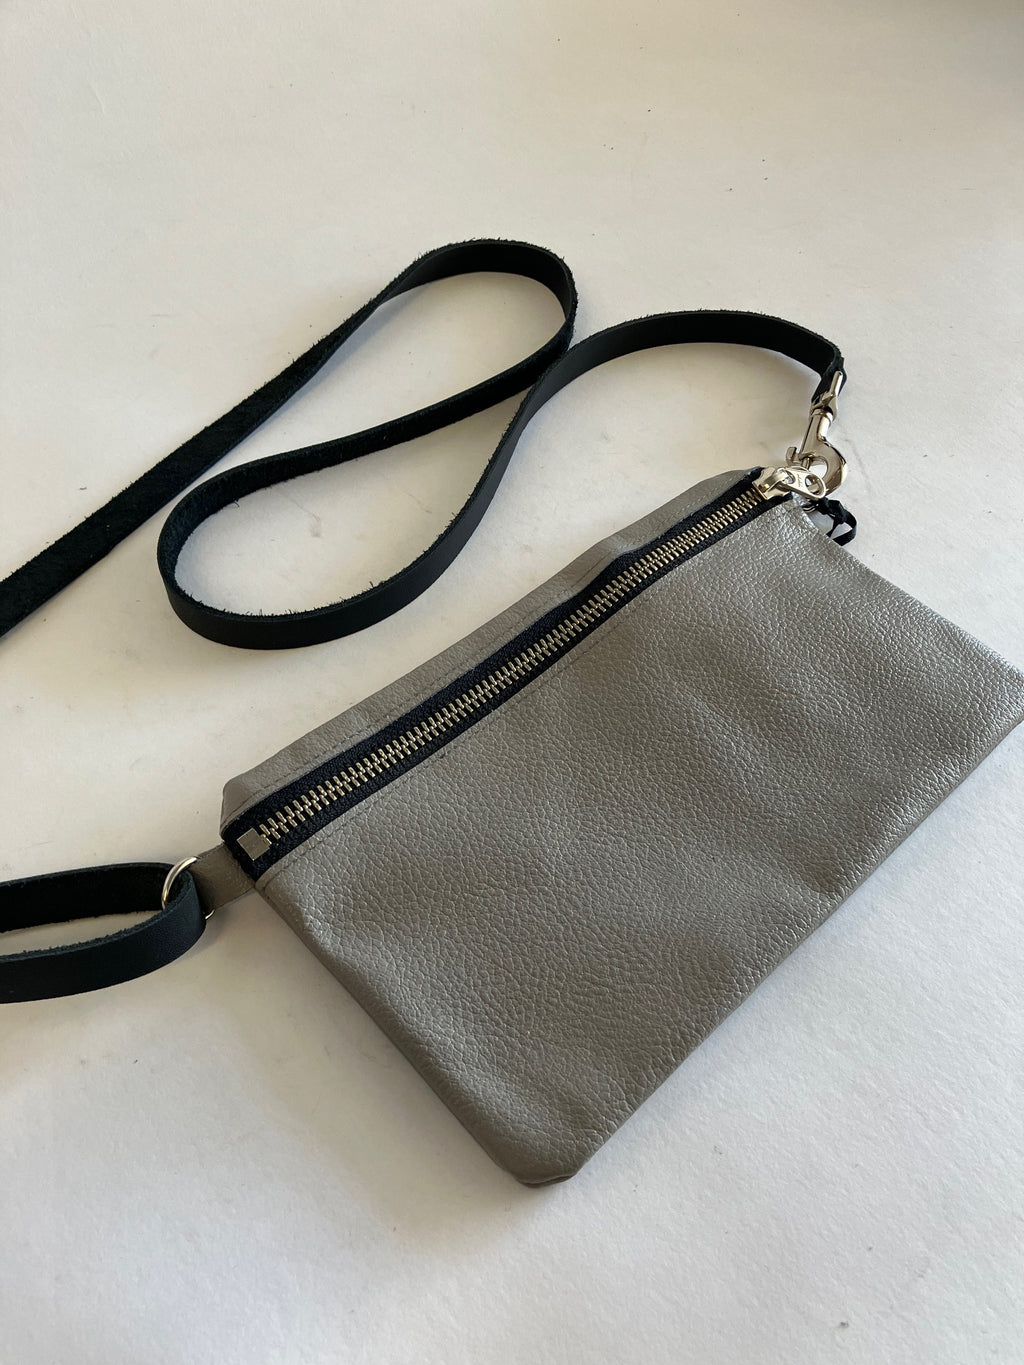 SAMPLE small minimalist leather Fanny pack, waist bag